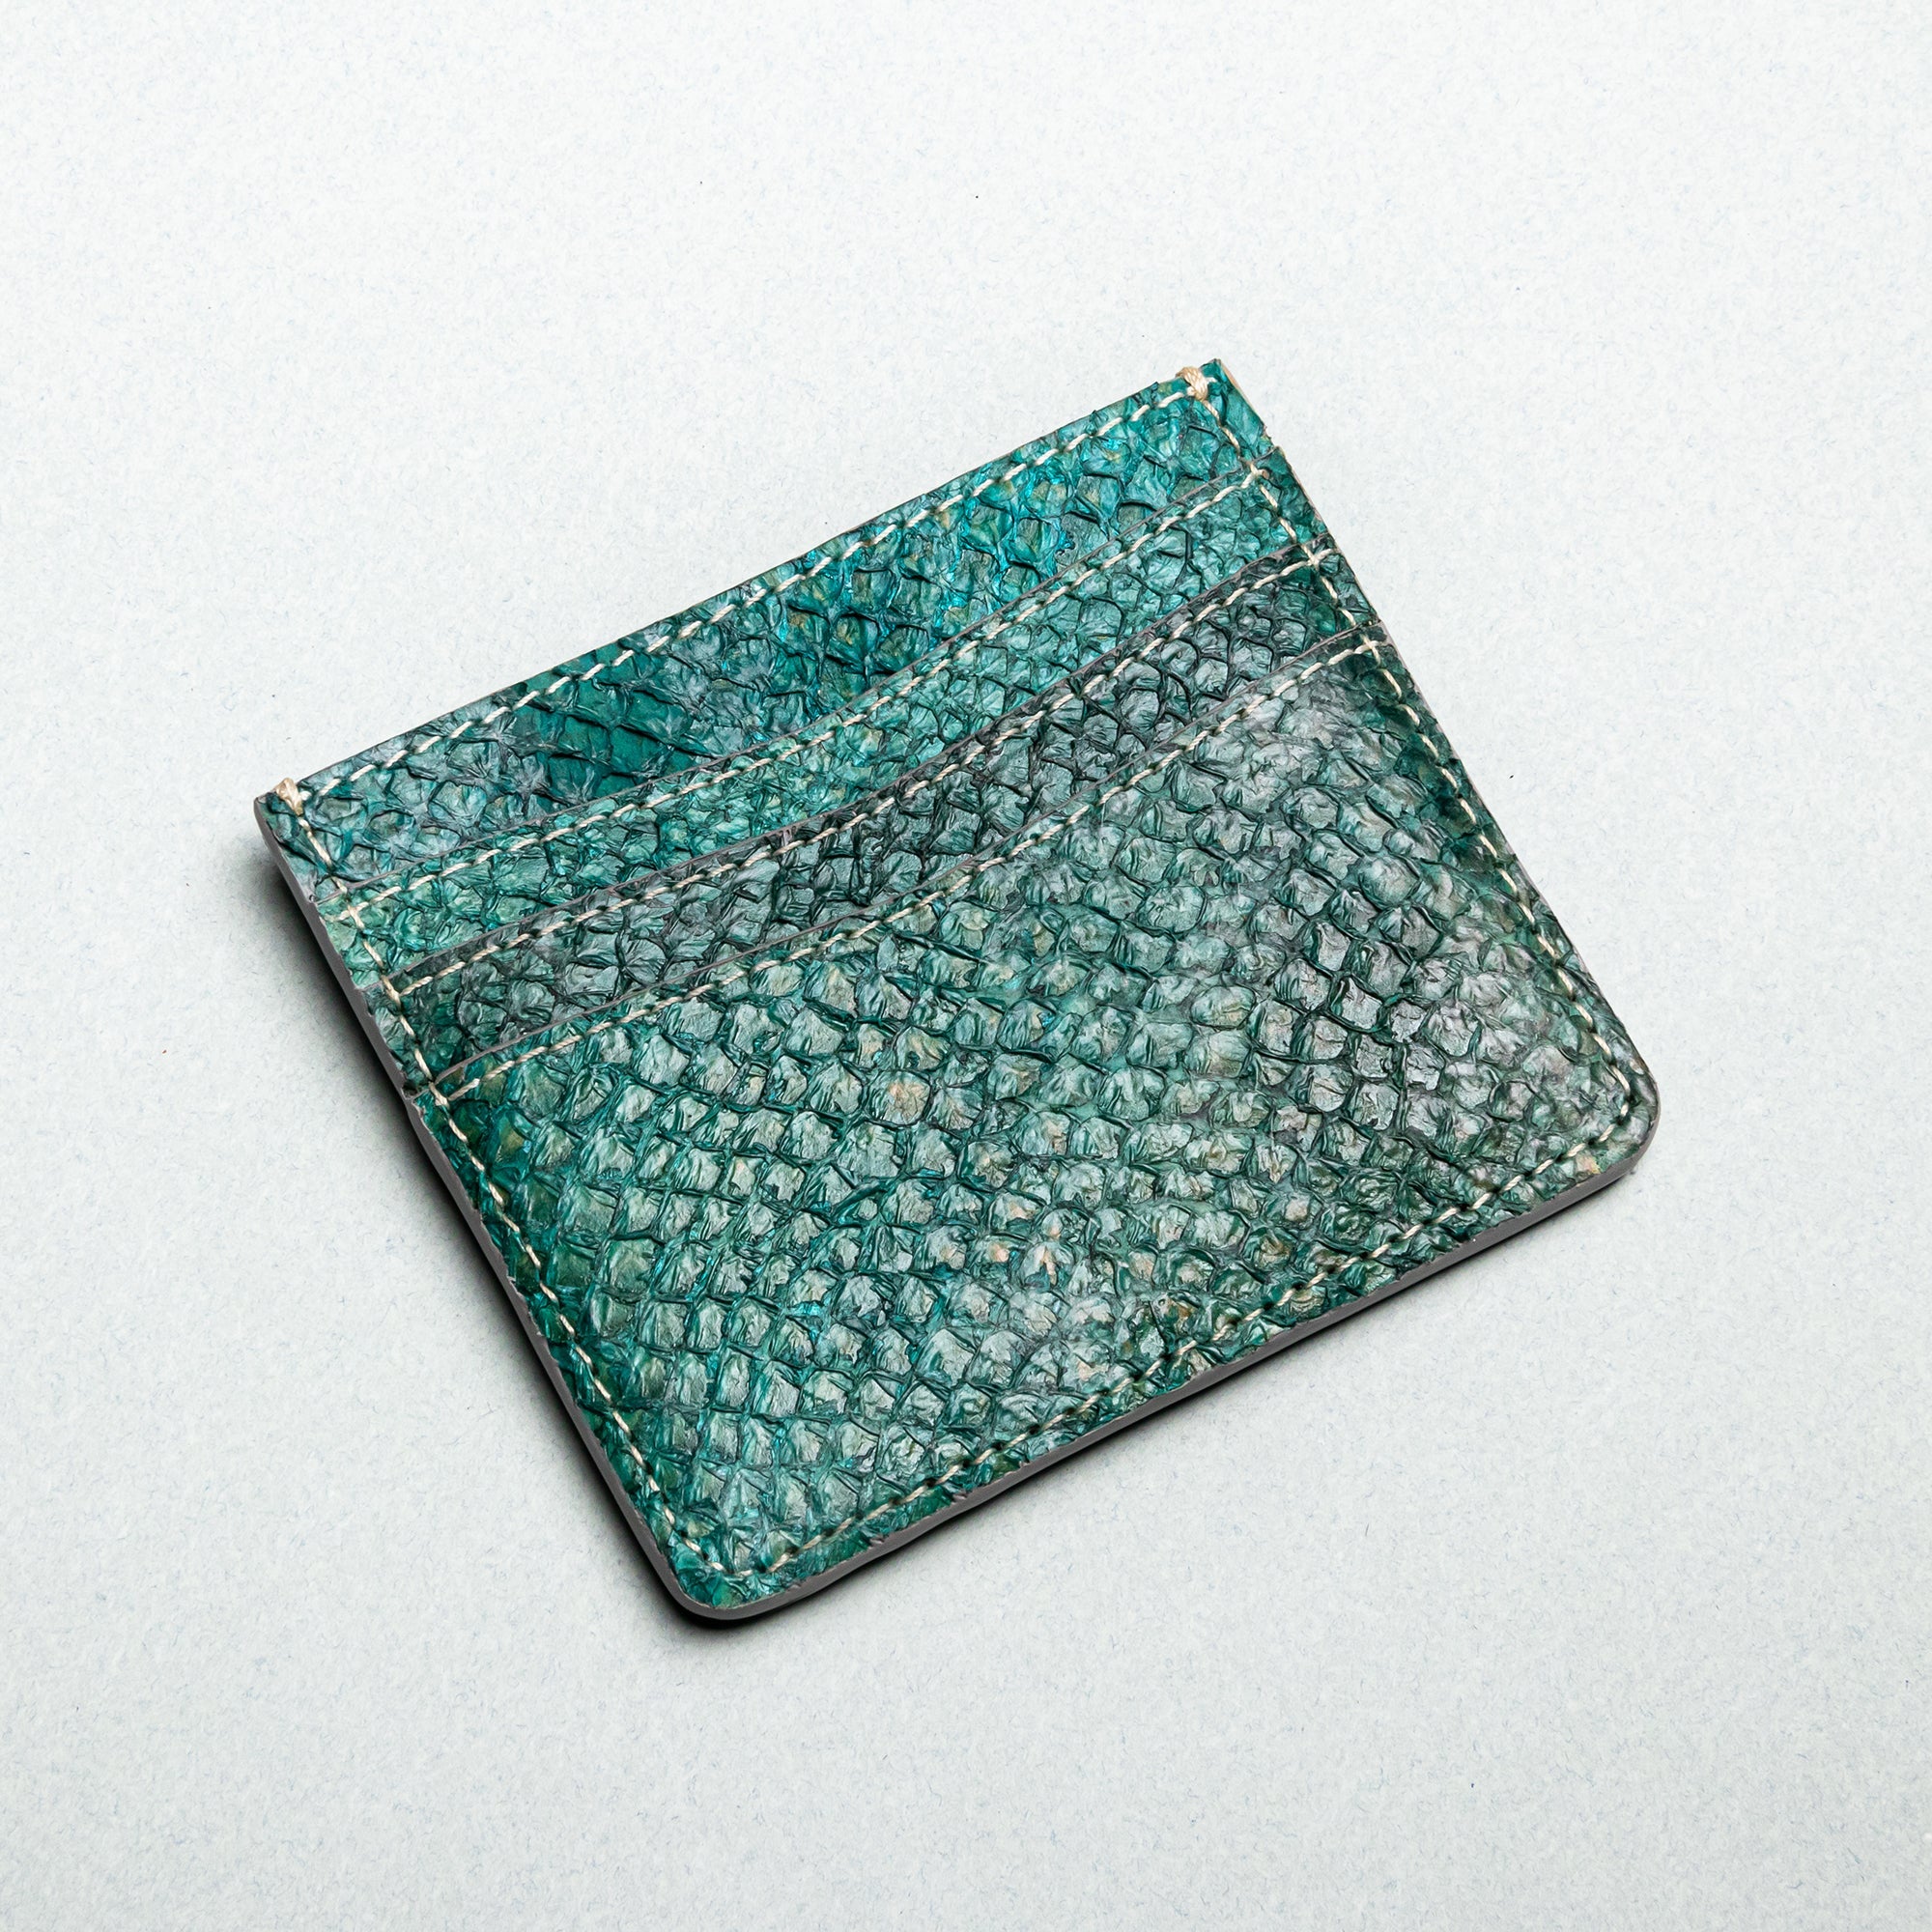 Salmon skin leather card holder "Smeraldo Cardholder"